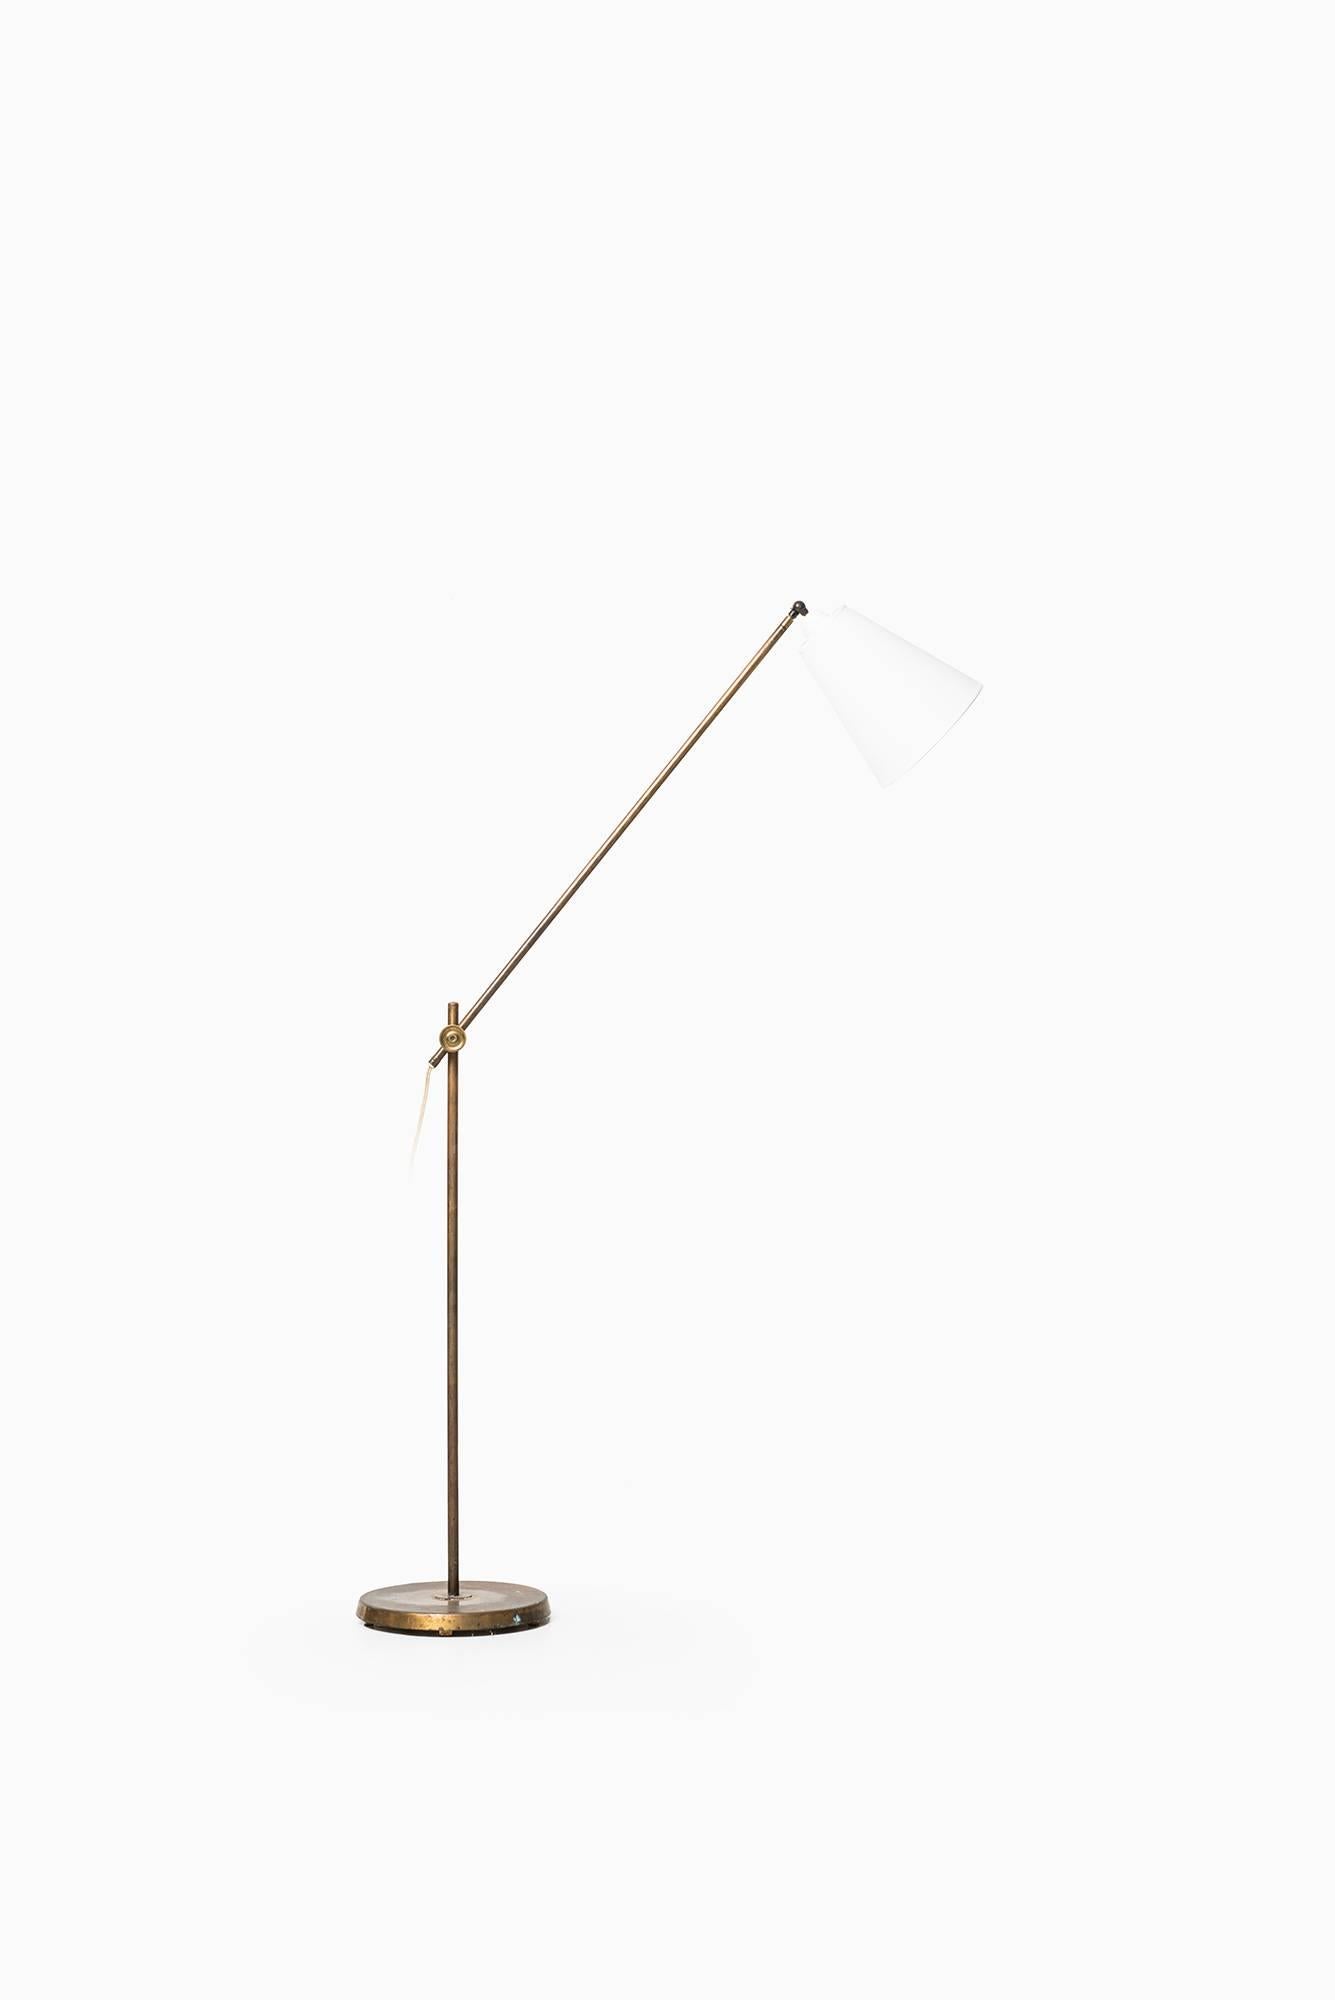 Scandinavian Modern Midcentury Floor Lamp with Flexible Arm Produced by ASEA in Sweden